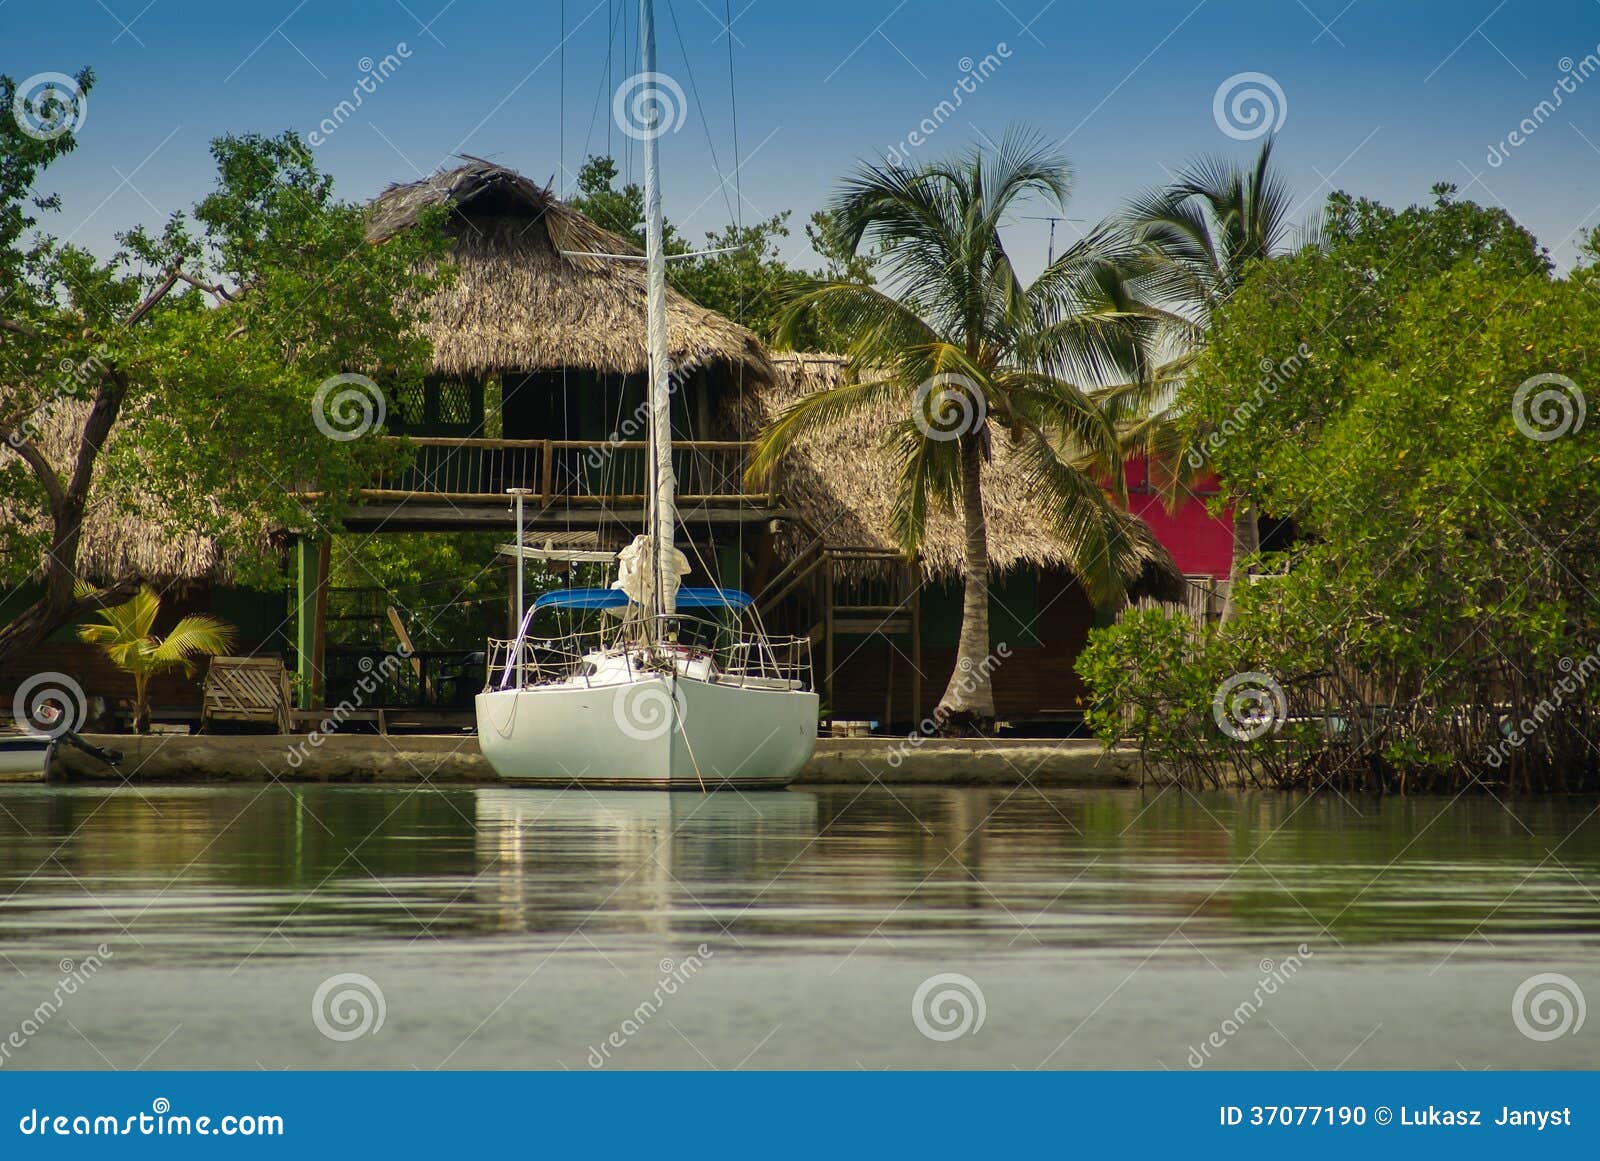 a tiny island in the caribbean archipelago san bernardo near tolu, colombia